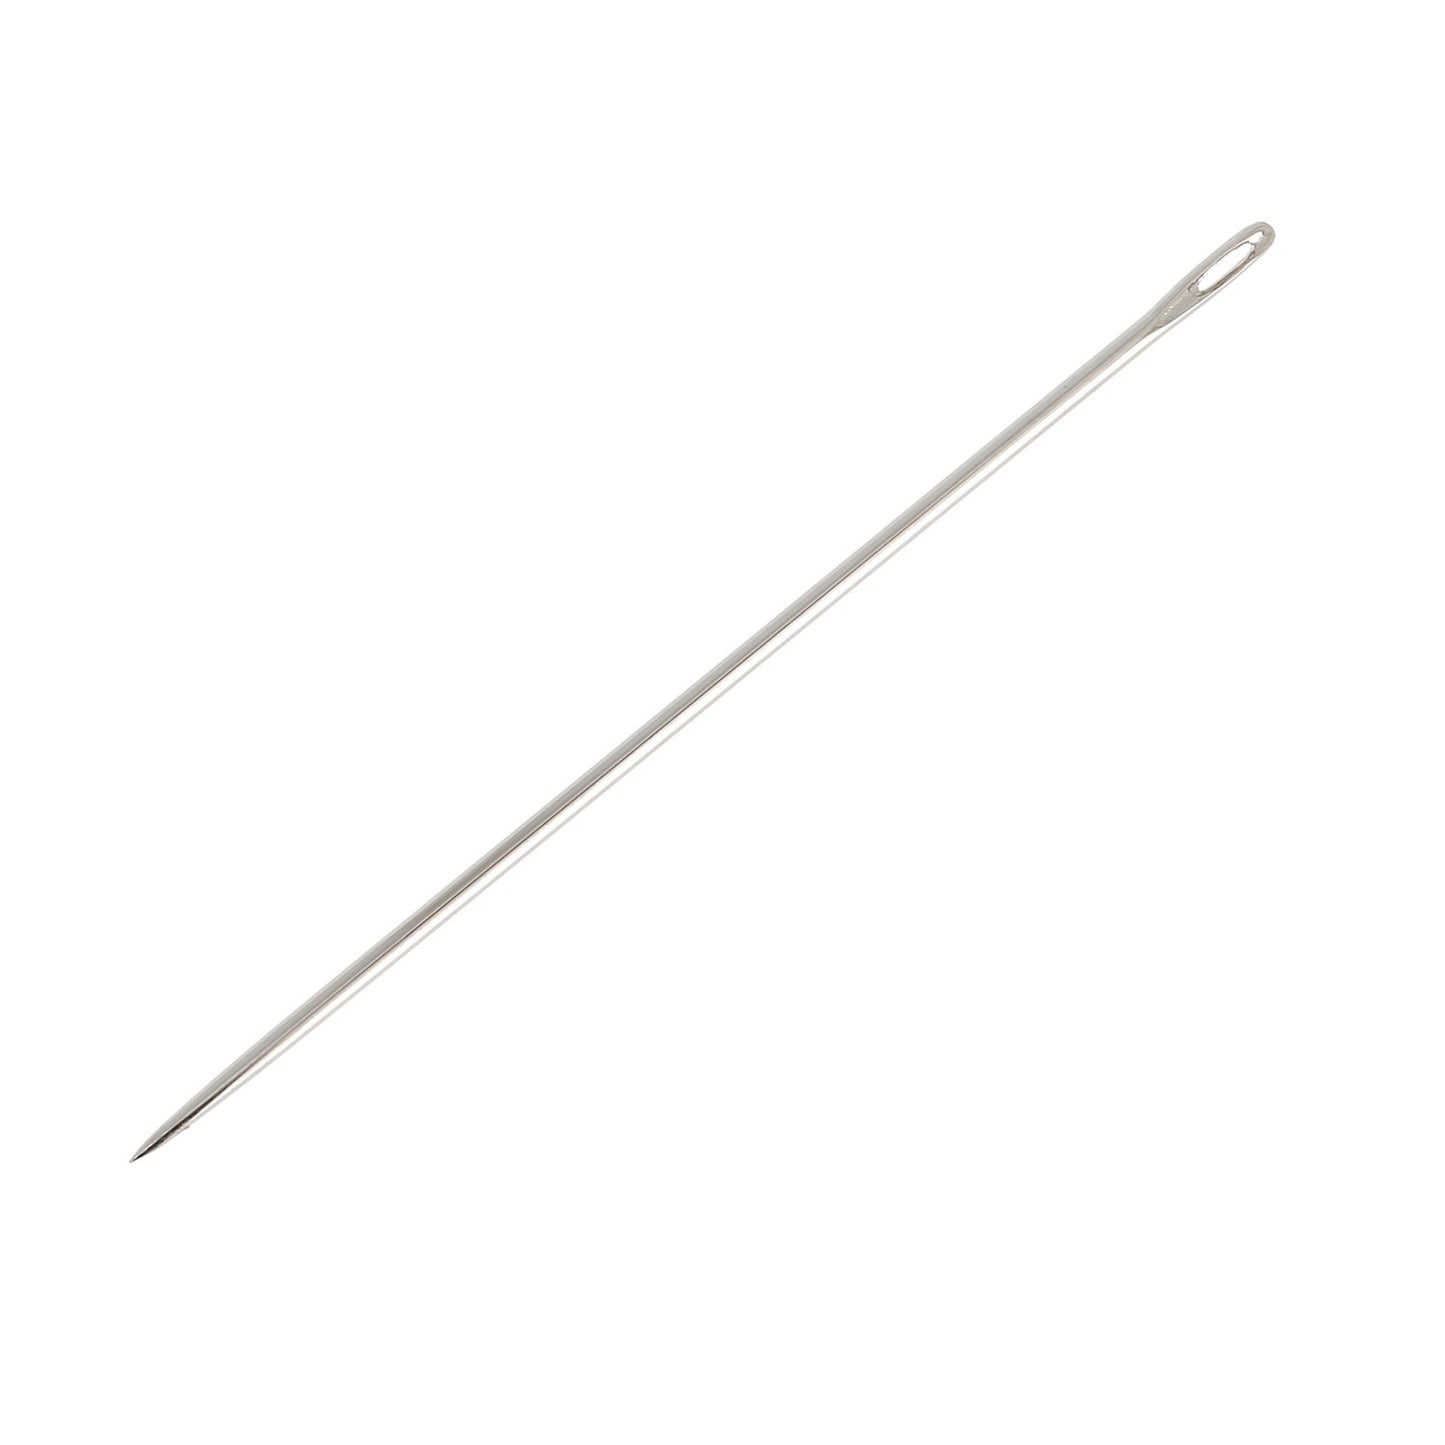 Bohin Milliners/Straw Needles Assorted Sizes 3/12 15 Needles